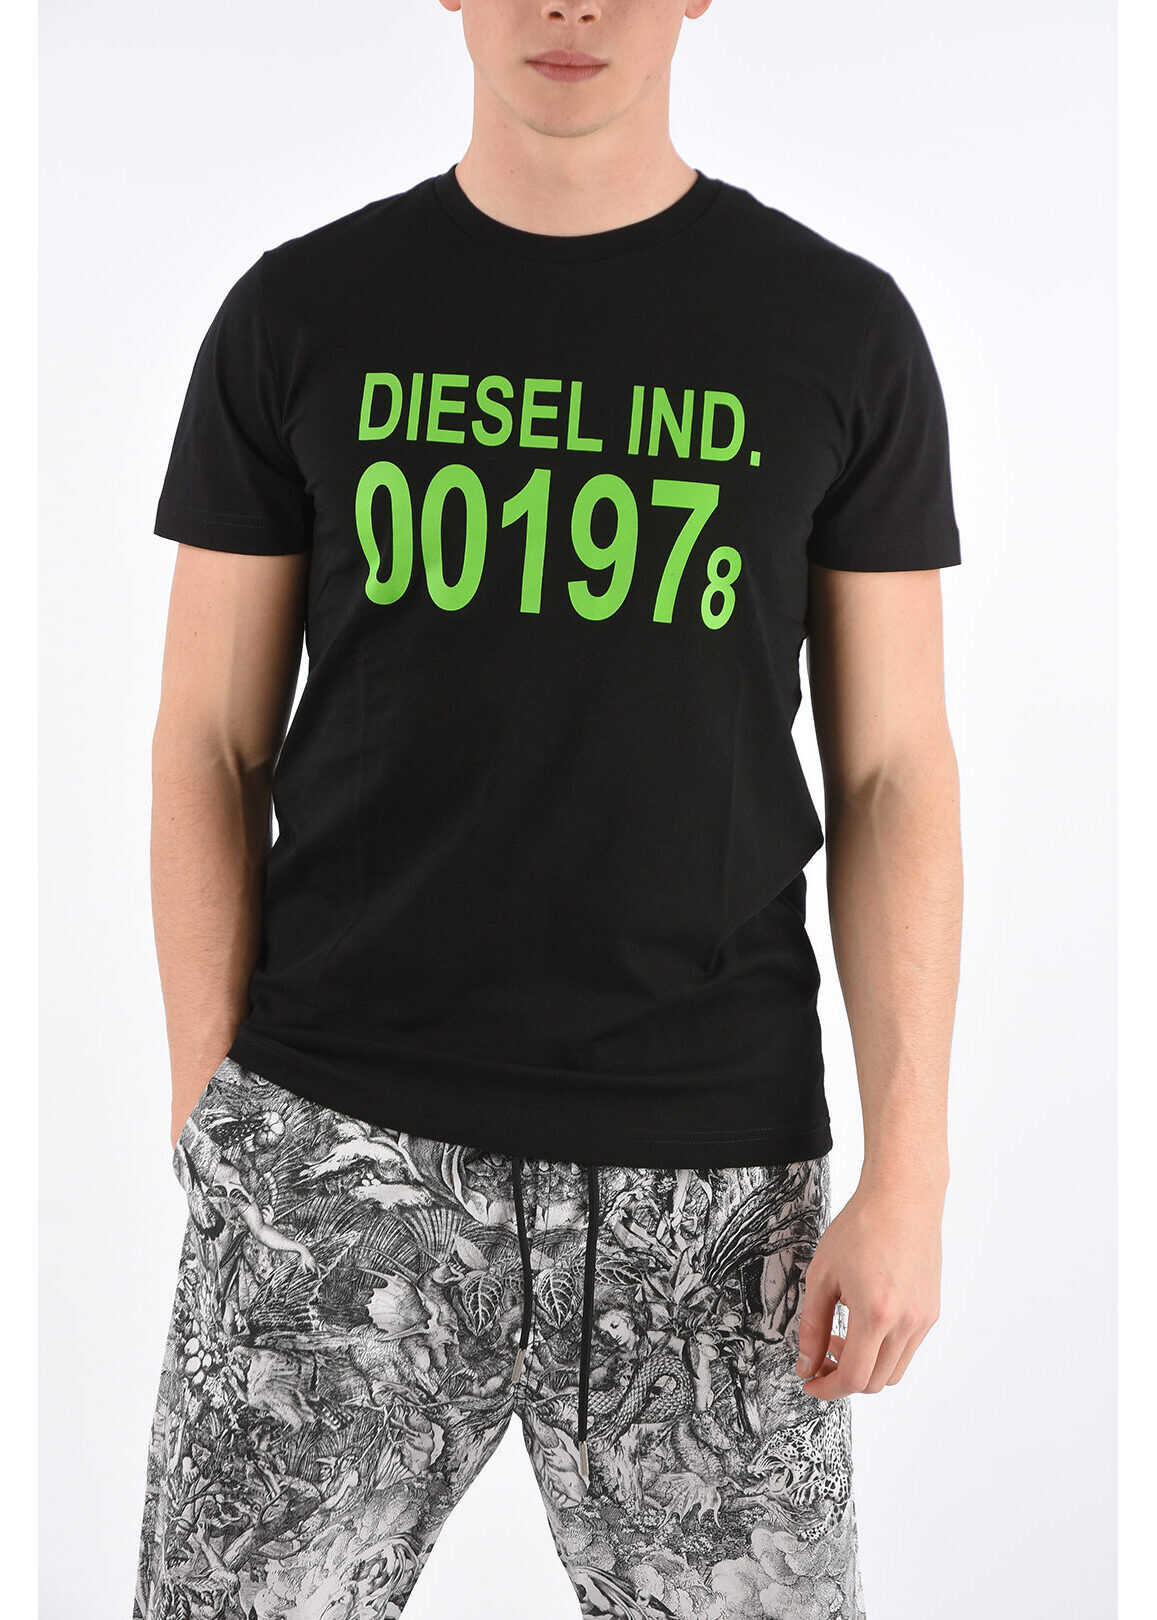 Diesel Logo Print T-DIEGO-001978 Crewneck T-Shirt BLACK